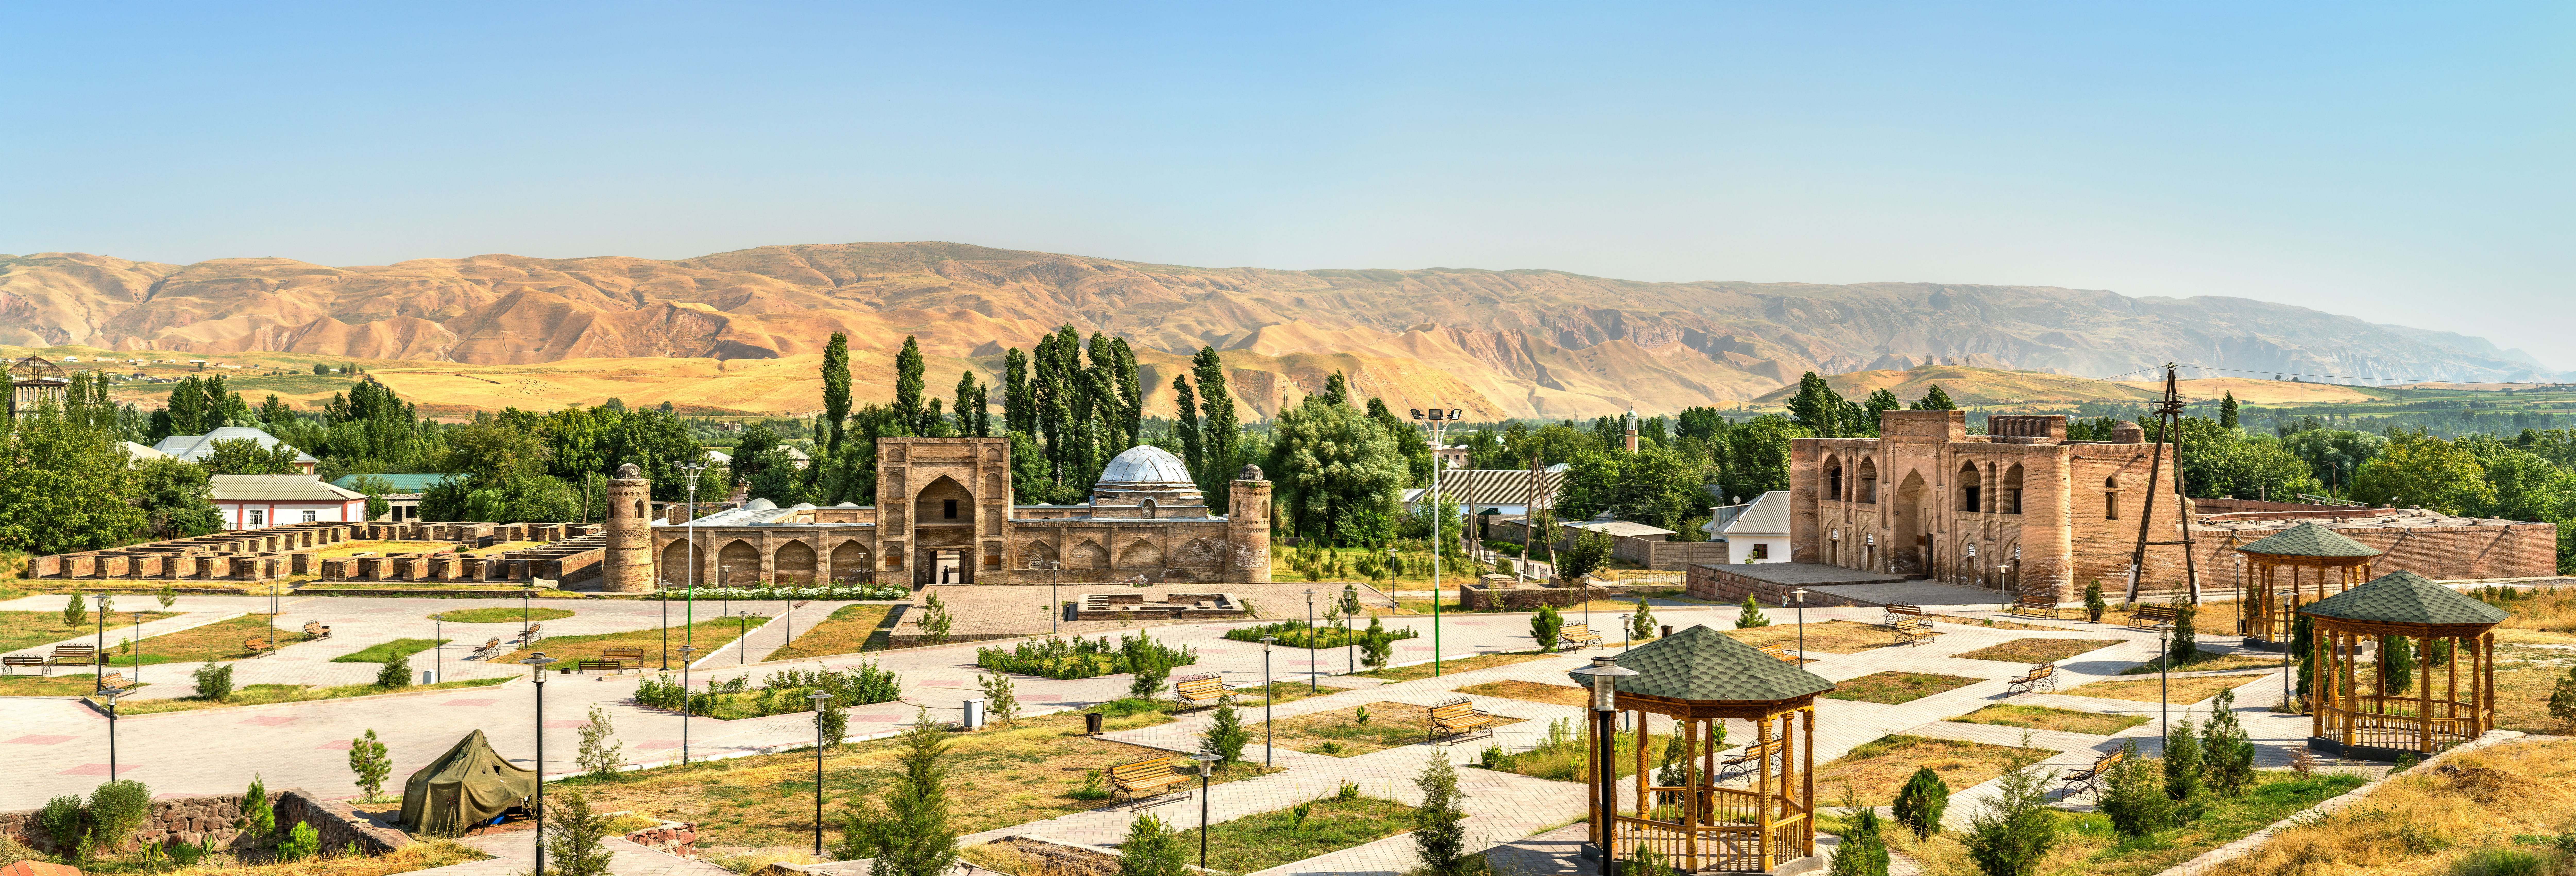 lieu touristique au Tadjikistan